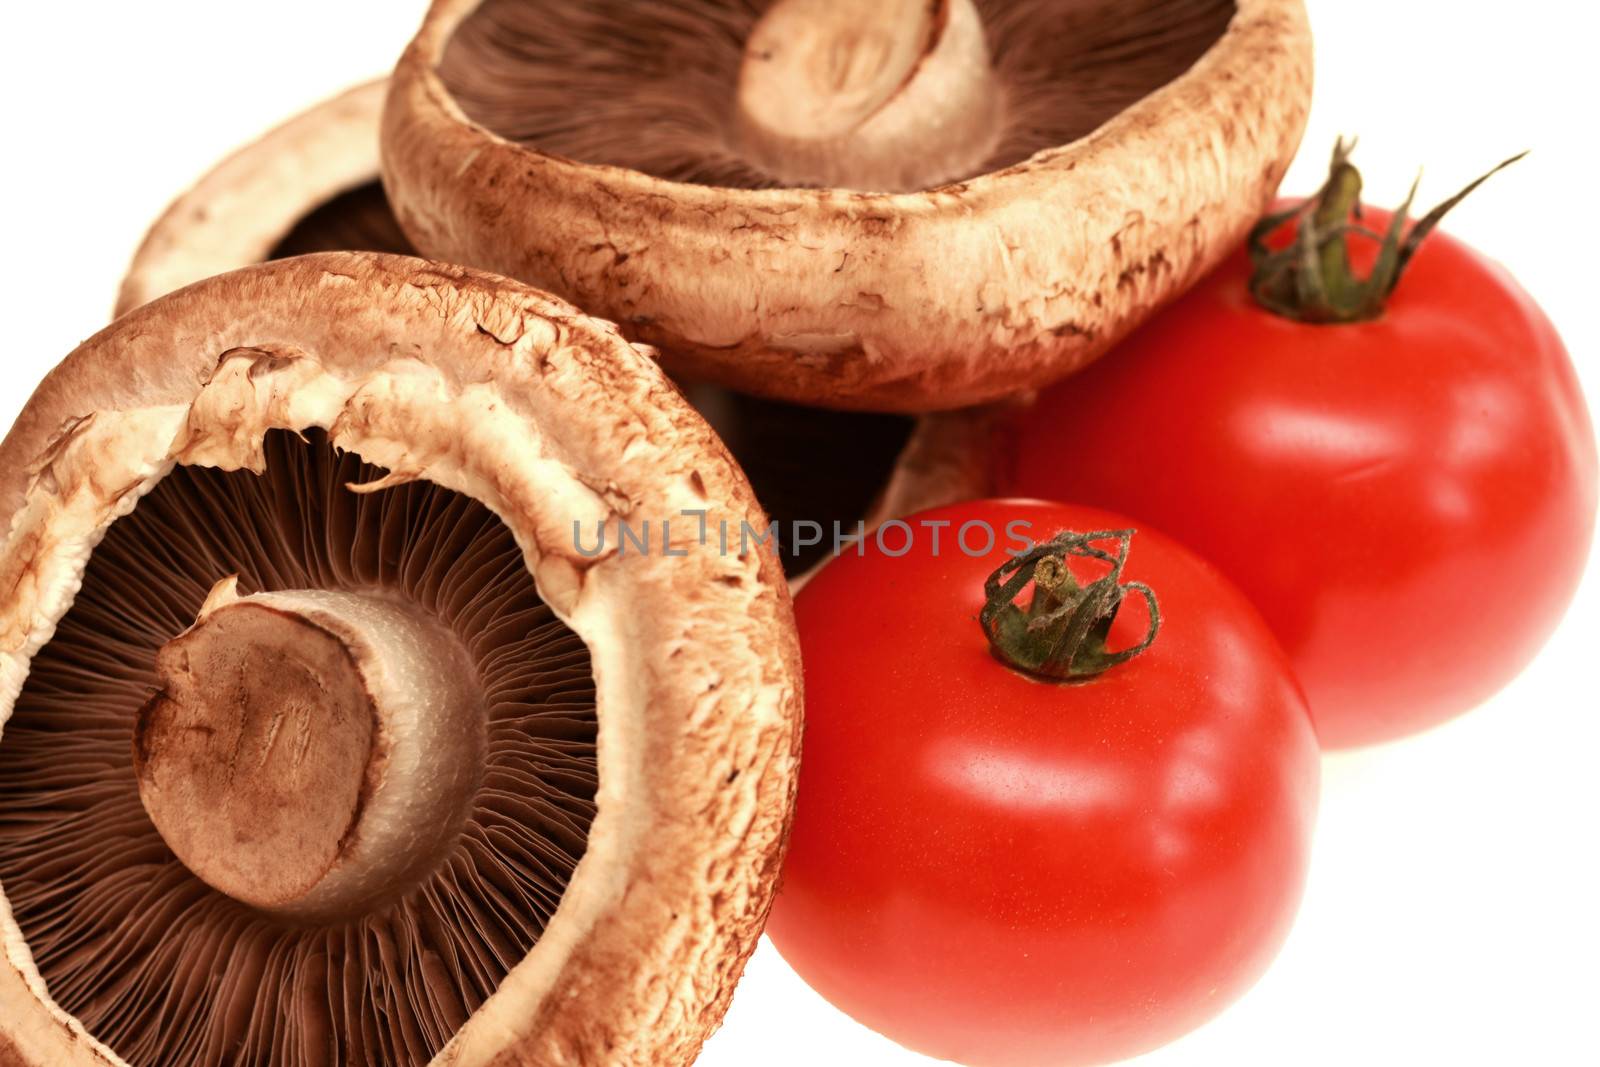 Mushroom and Tomatoes by Whiteboxmedia